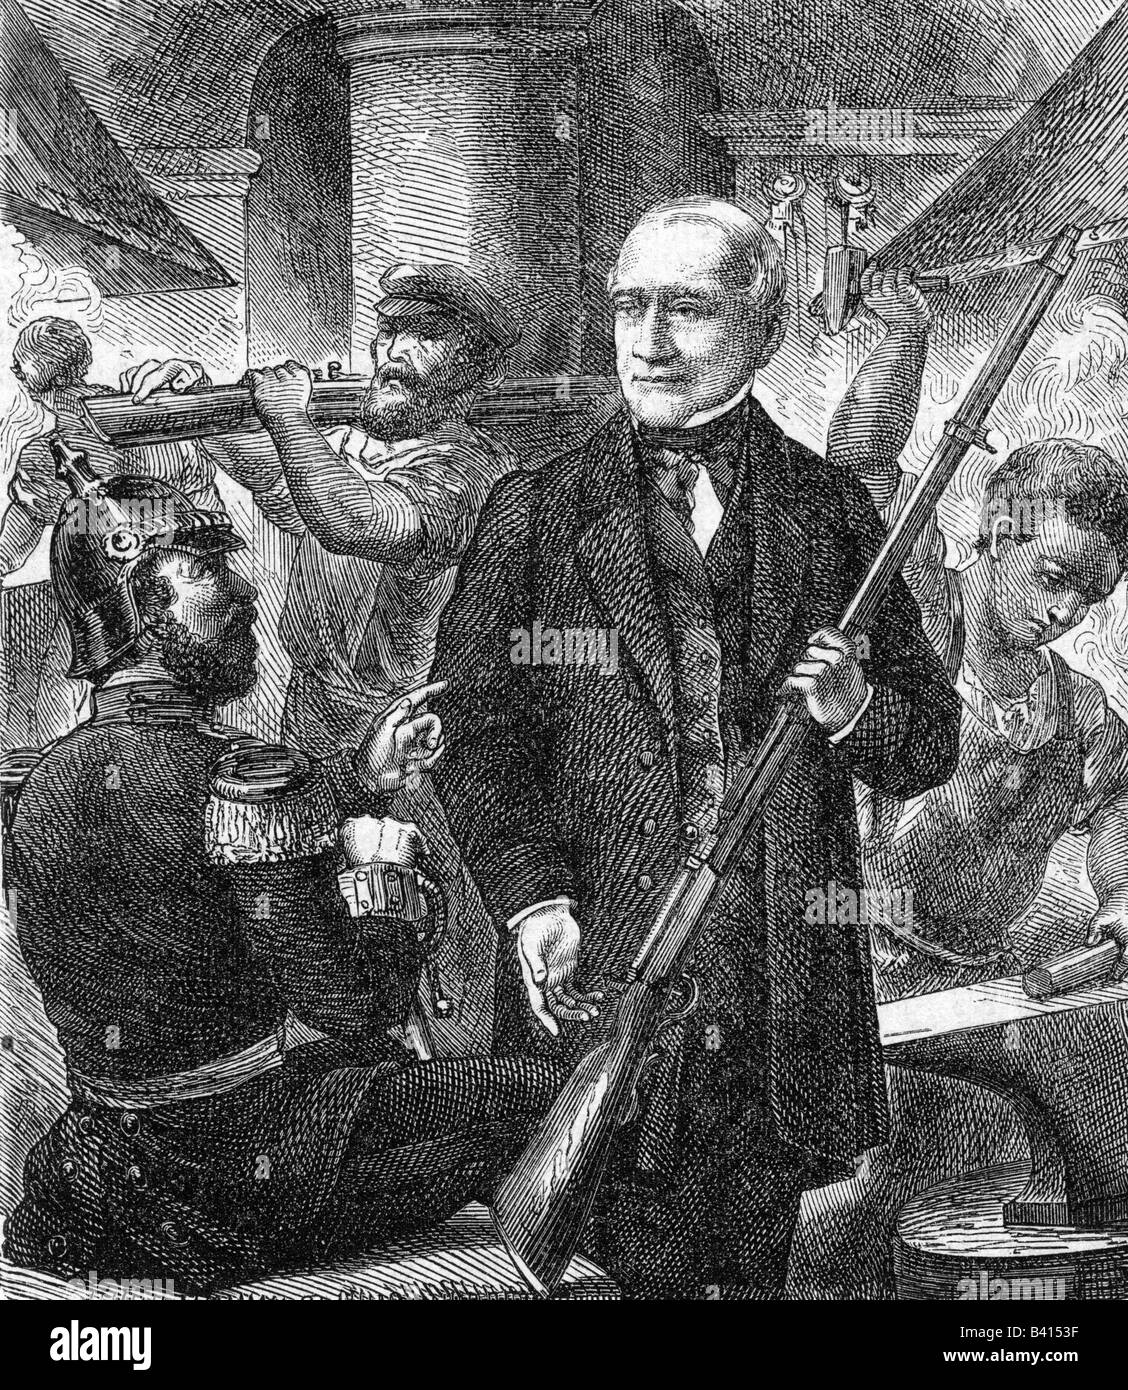 Dreyse, Johann Nikolaus von, 20.11.1787 - 9.12.1867, German inventor, with his 'Needle gun' in his workshop, wood engraving, 19th century, Stock Photo